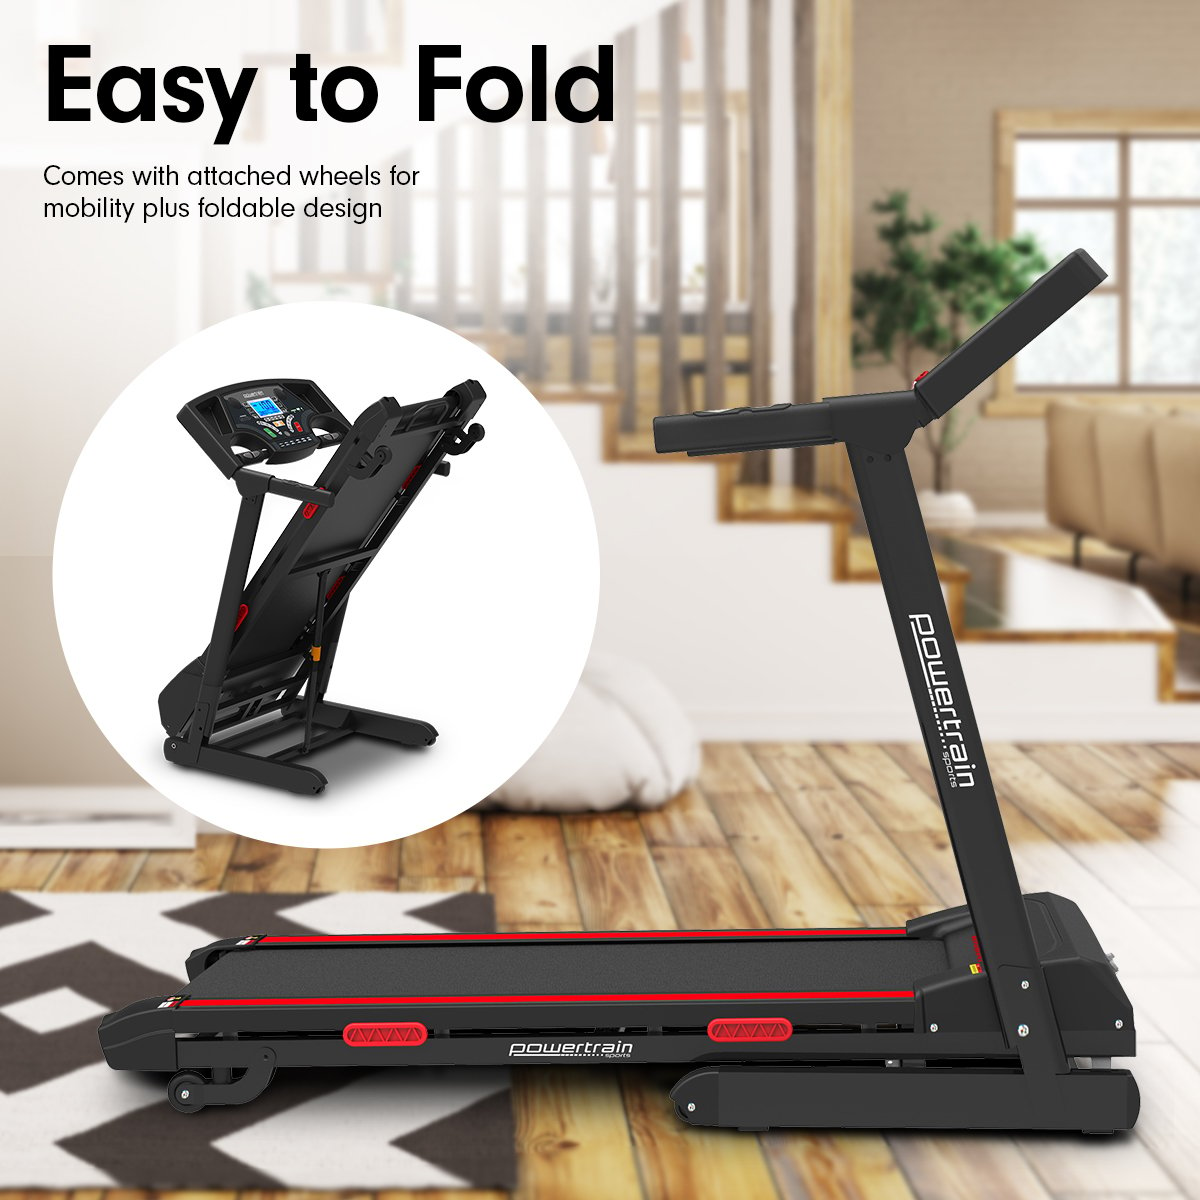 Powertrain K200 Electric Treadmill Folding Home Gym Running  Machine